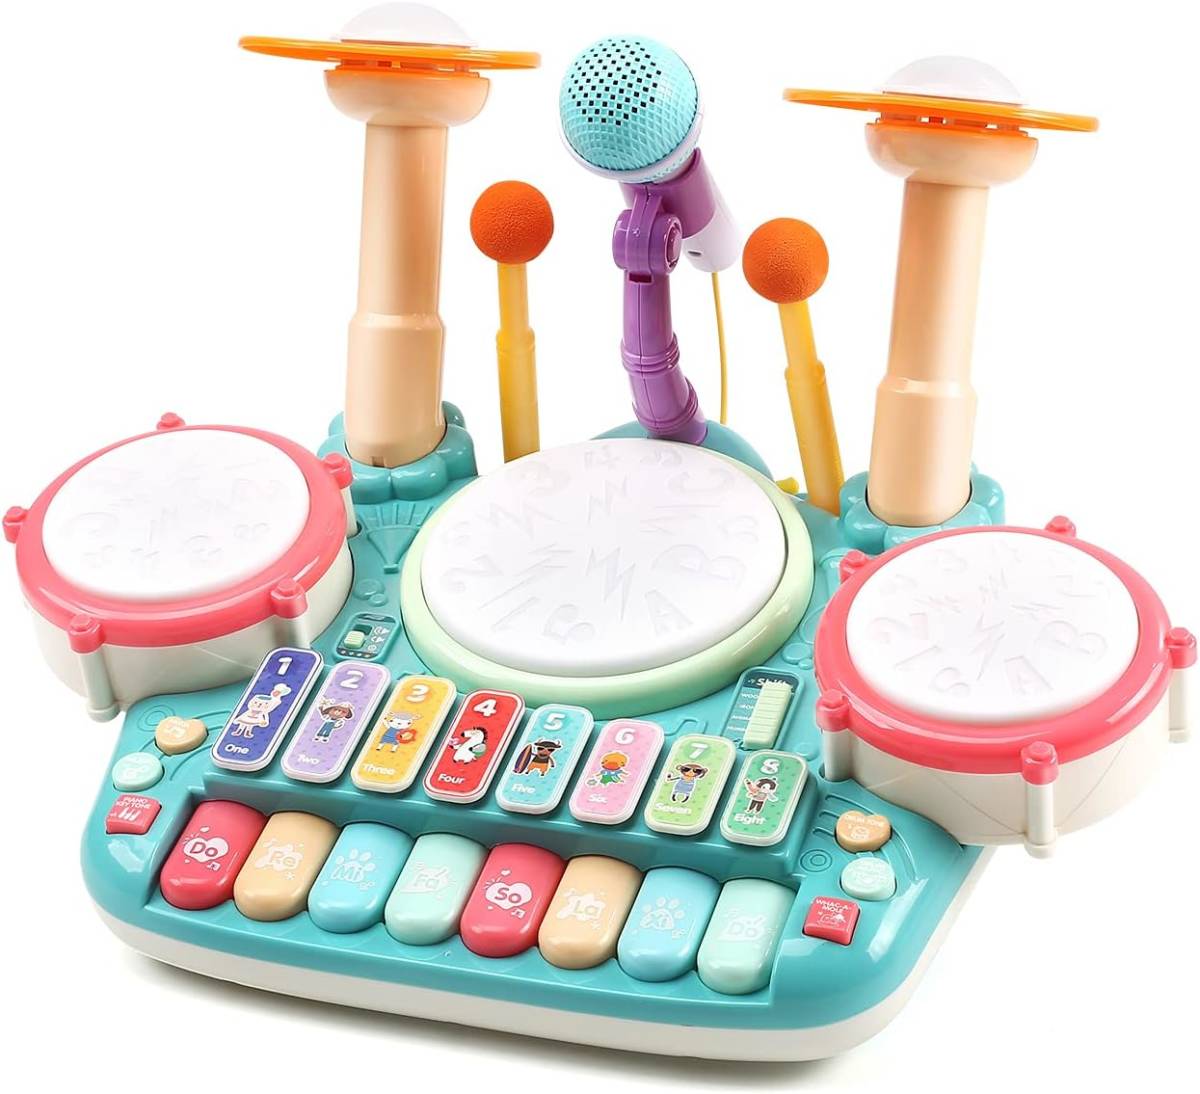 Cute Stone 楽器 おもちゃ 5in1遊び方 ドラムセット ピアノ 子供おもちゃ マイク付き クリスマスプレゼント 4種類